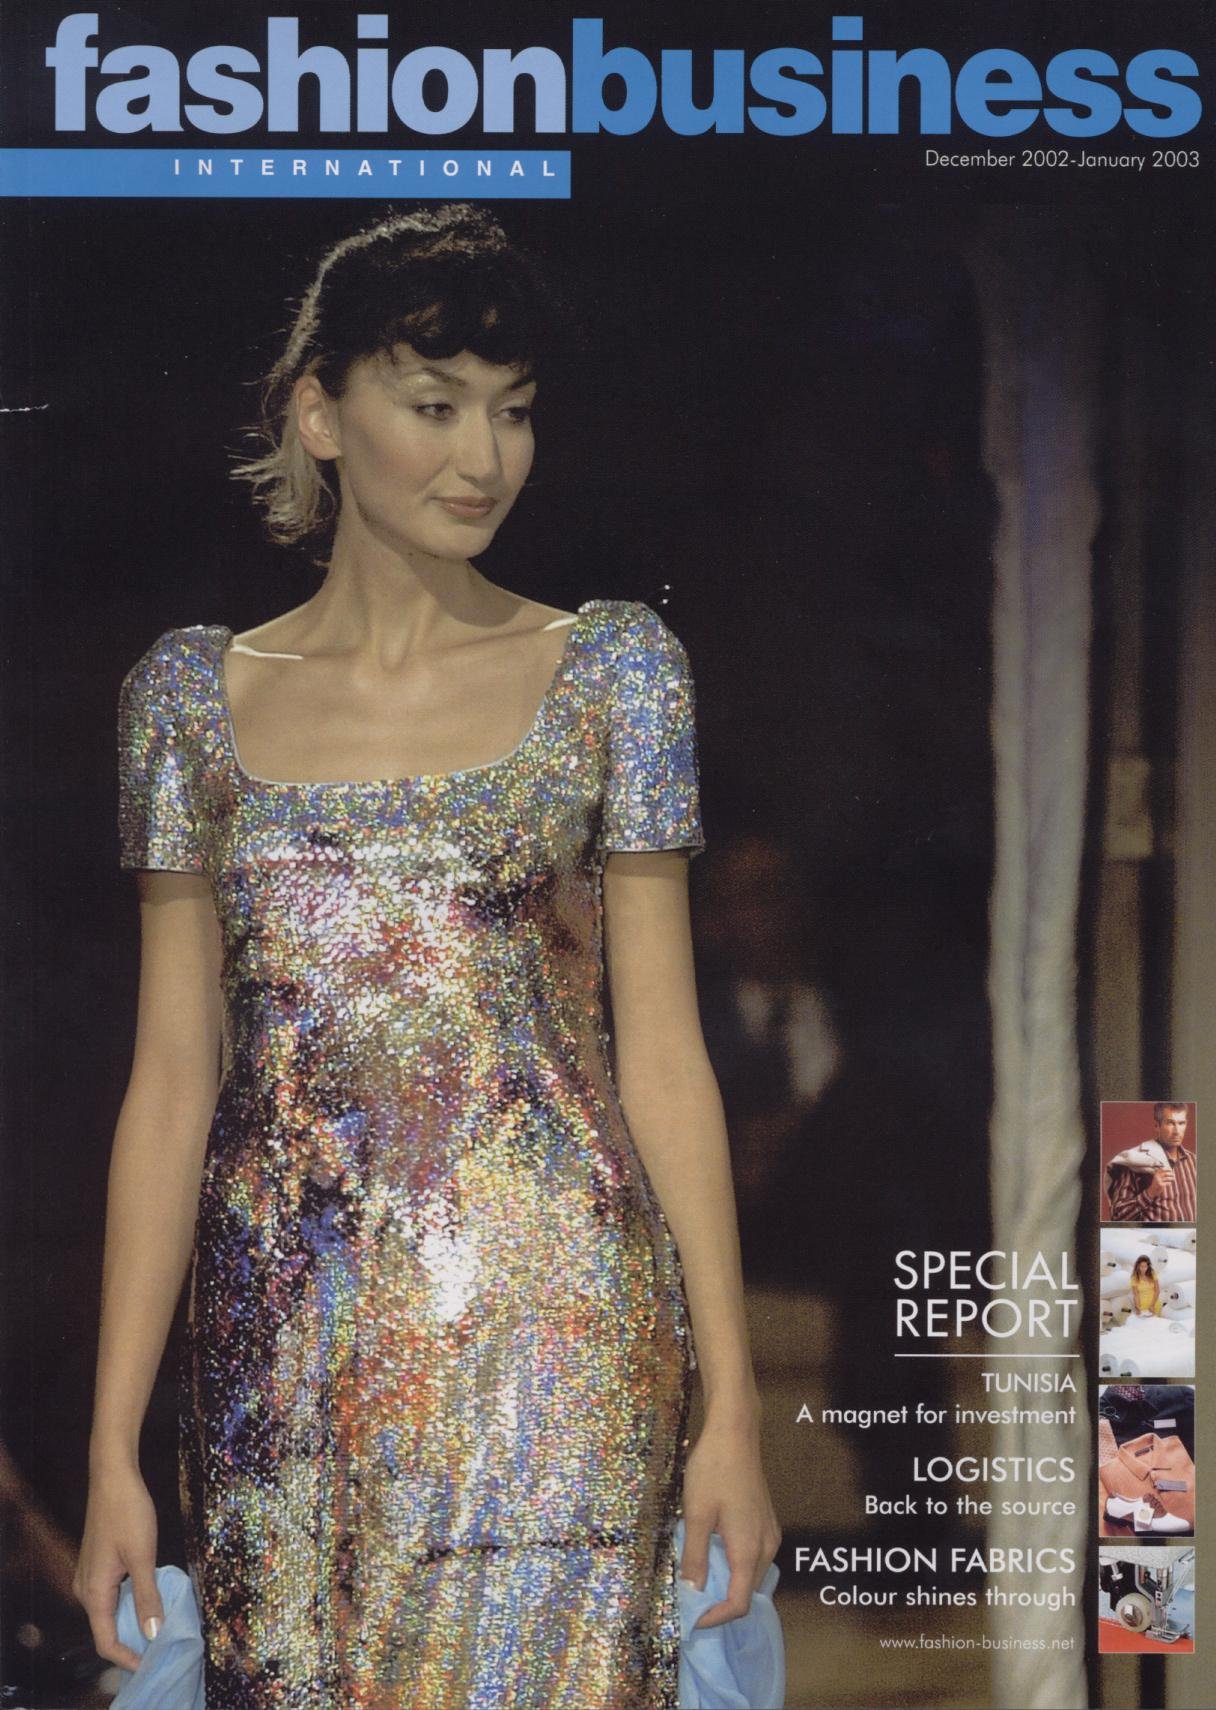 Cover page of Fashion Business International magzine Dec 2002 - Jan 2003